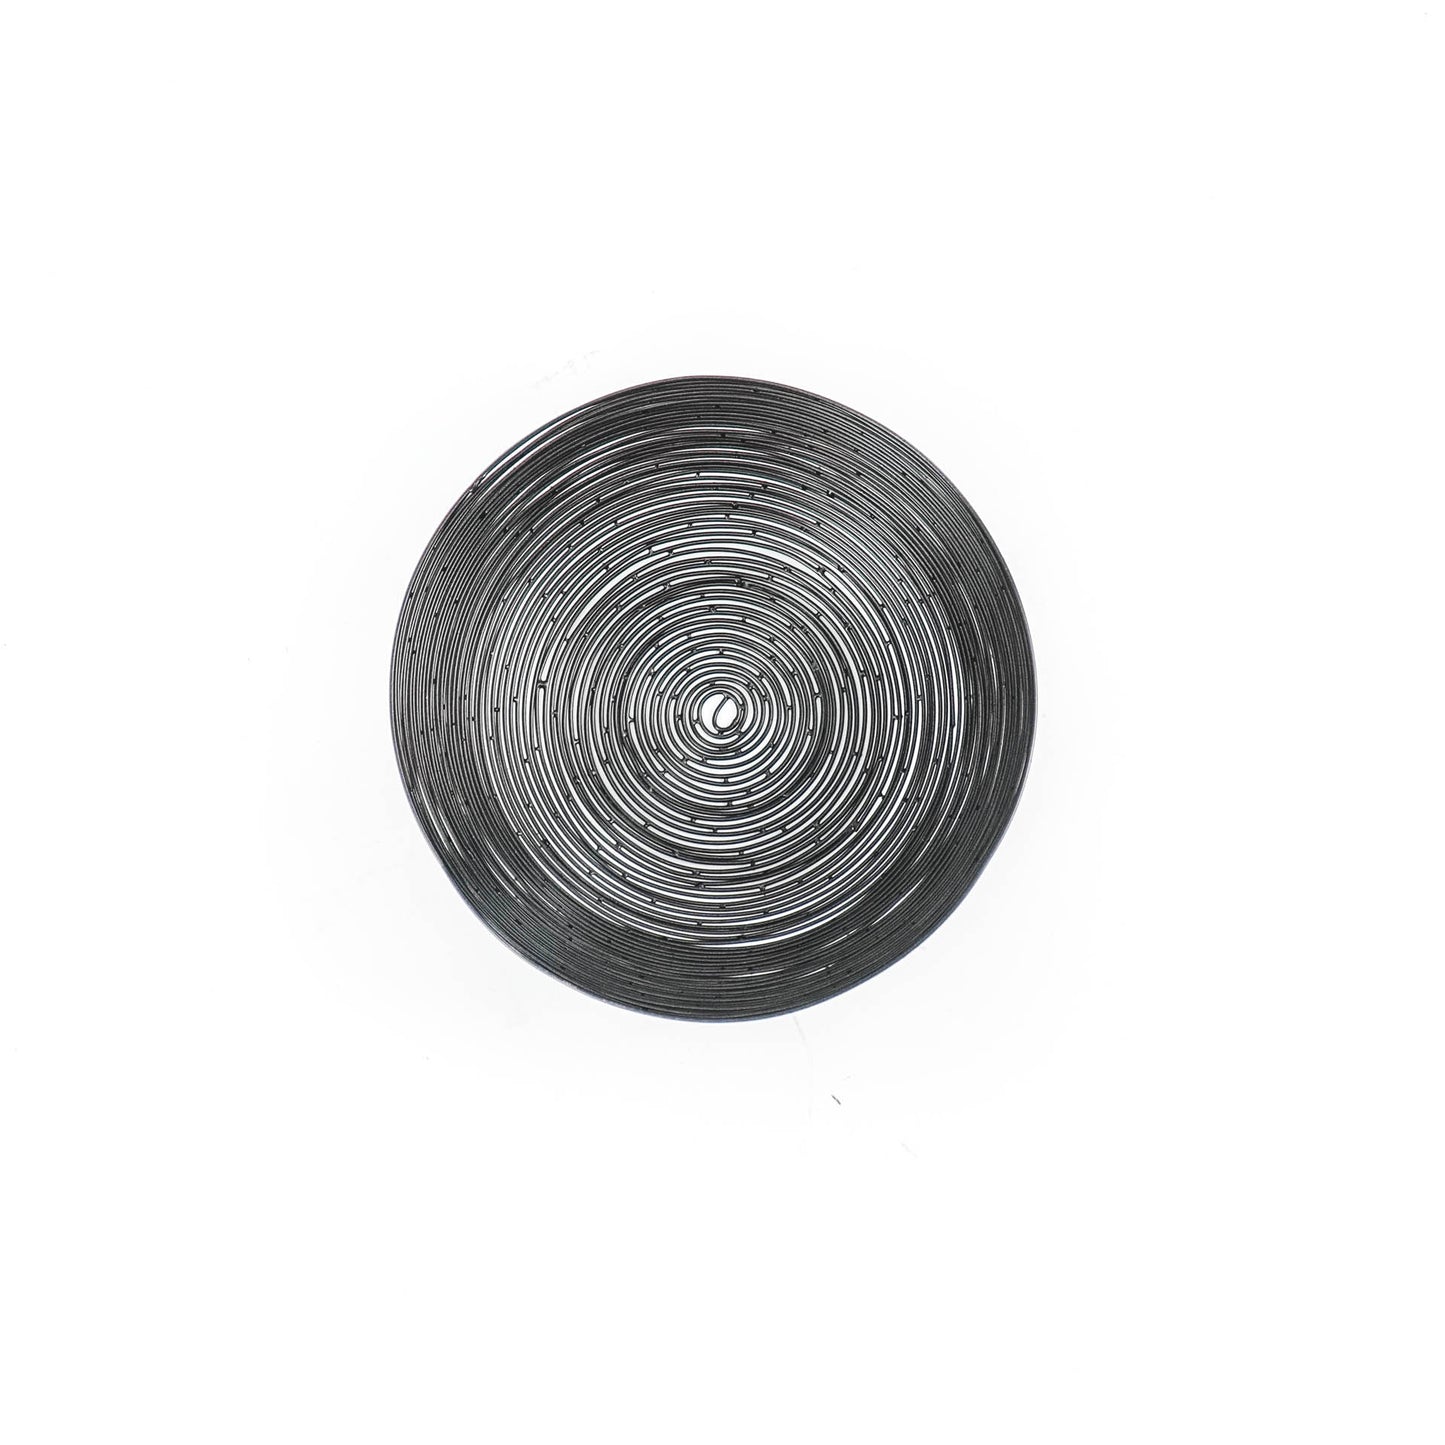 Housevitamin Wired Bowl Steel - Black - 26x26x10cm